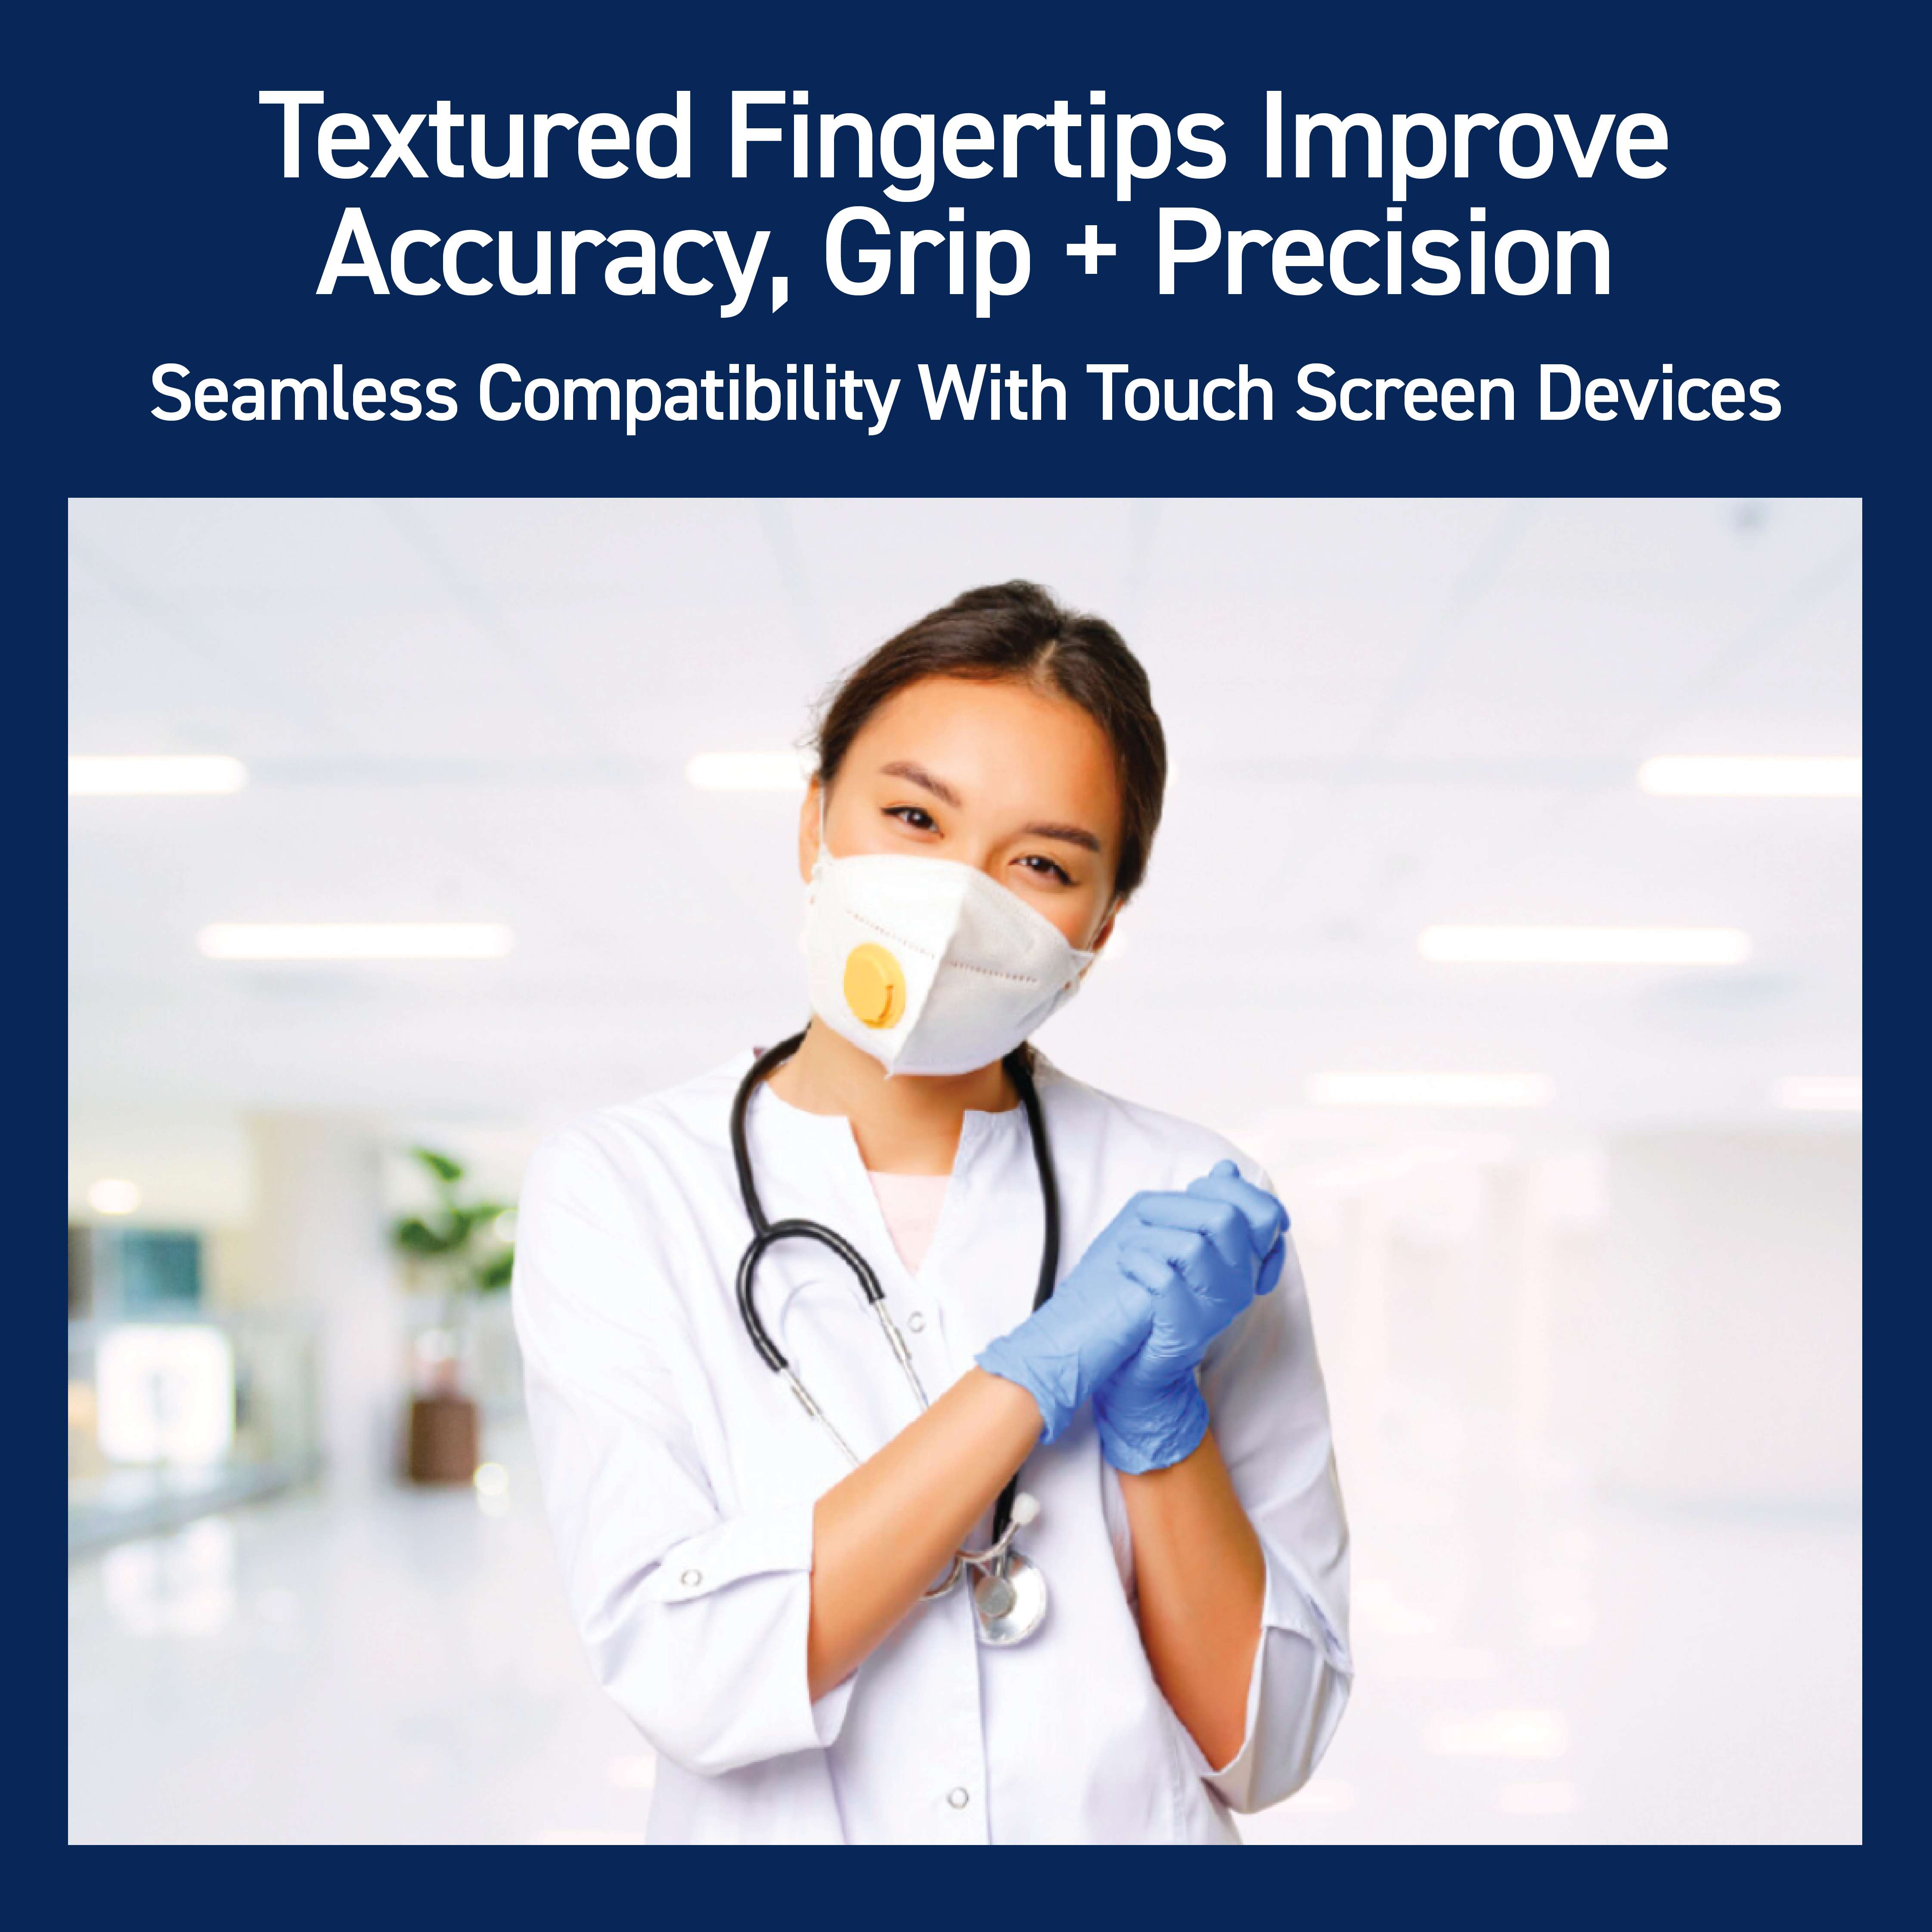 Trustex Medical Exam Gloves Small, Latex-Free & Powder-Free, Box of 100